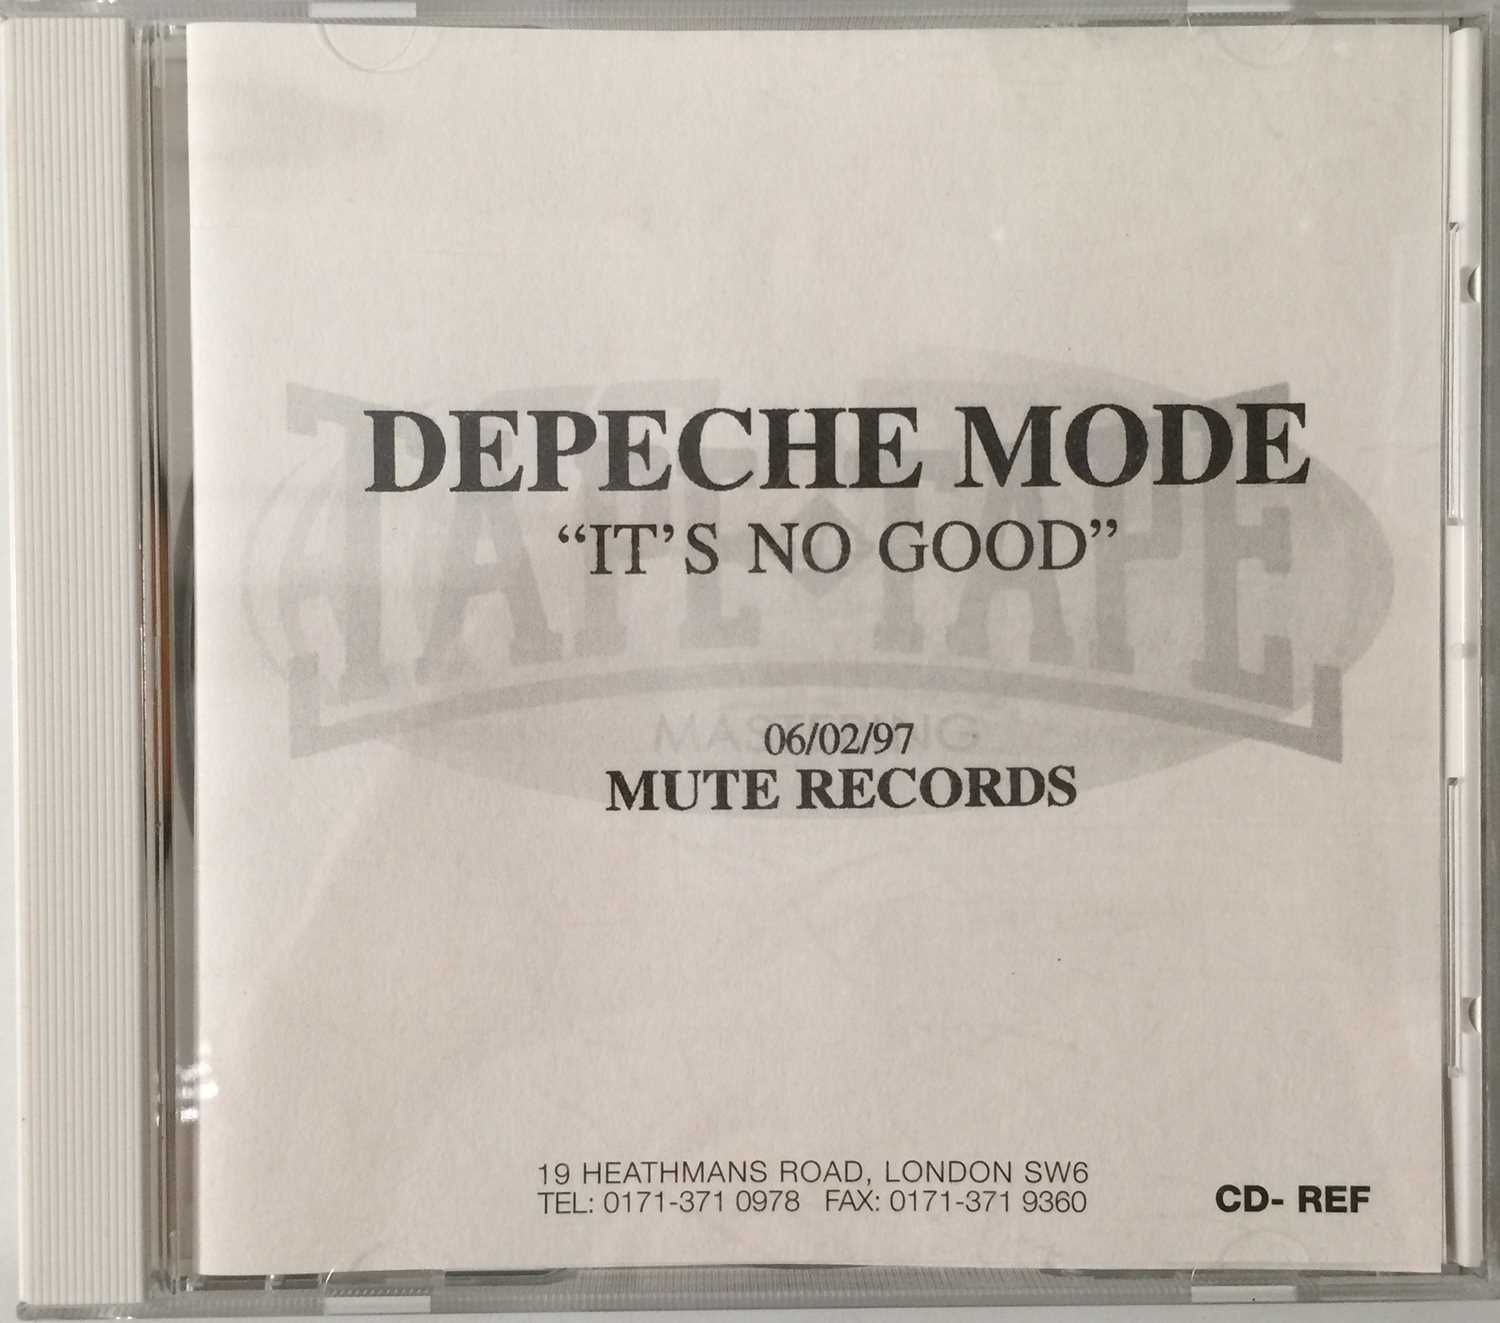 Lot 614 - DEPECHE MODE - IT'S NO GOOD CDR PROMO (MUTE RECORDS)